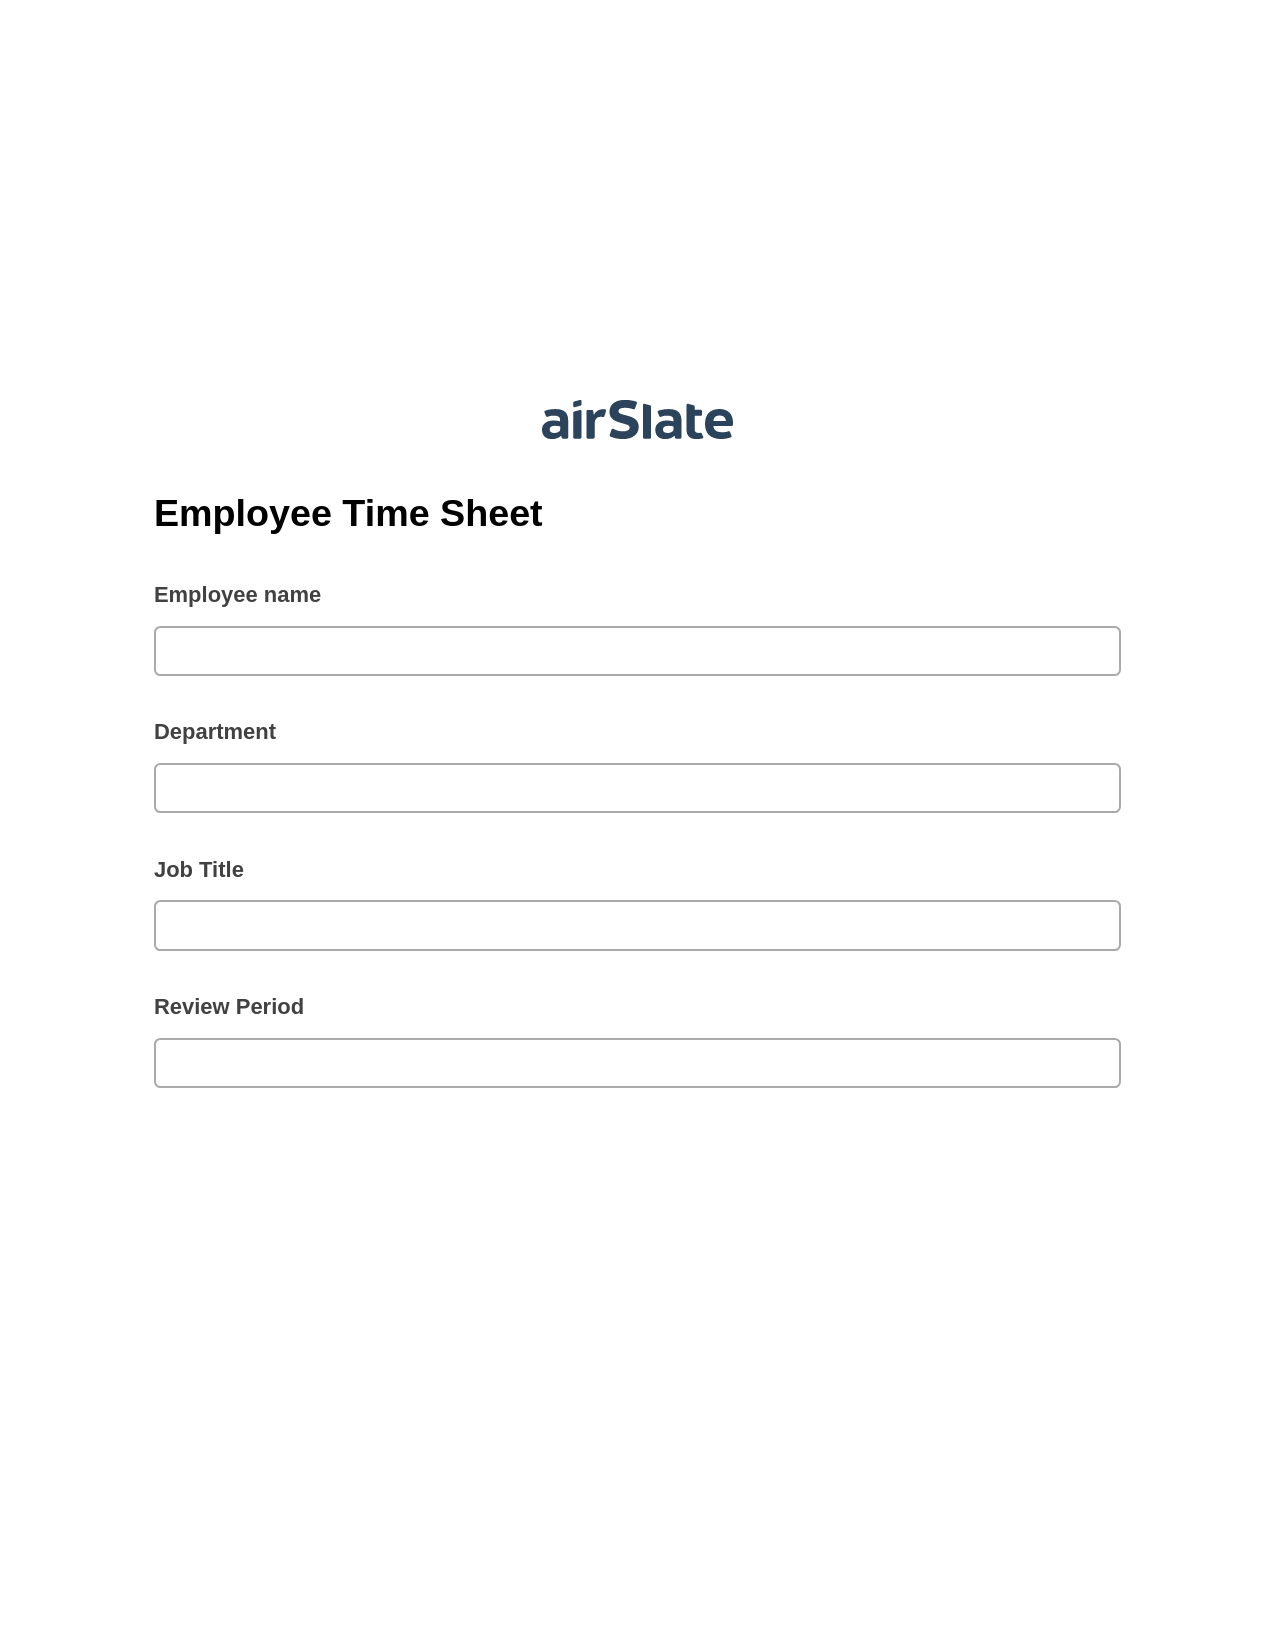 Multirole Employee Time Sheet System Bot - Slack Two-Way Binding Bot, Create slate addon, Export to Google Sheet Bot